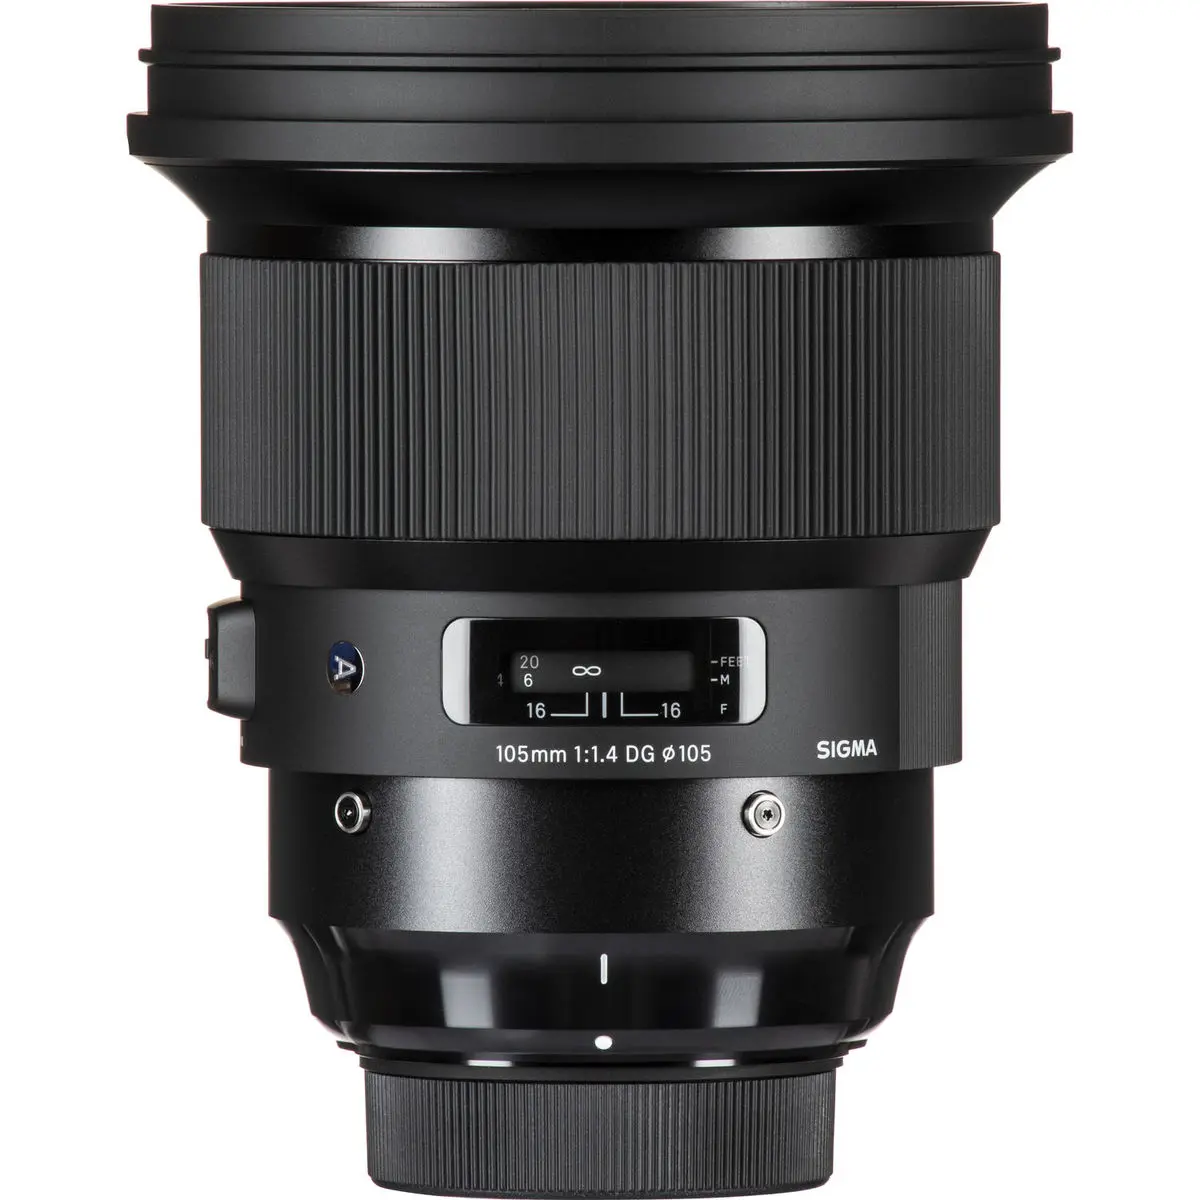 2. Sigma 105mm F1.4 DG HSM | Art (Canon) Lens